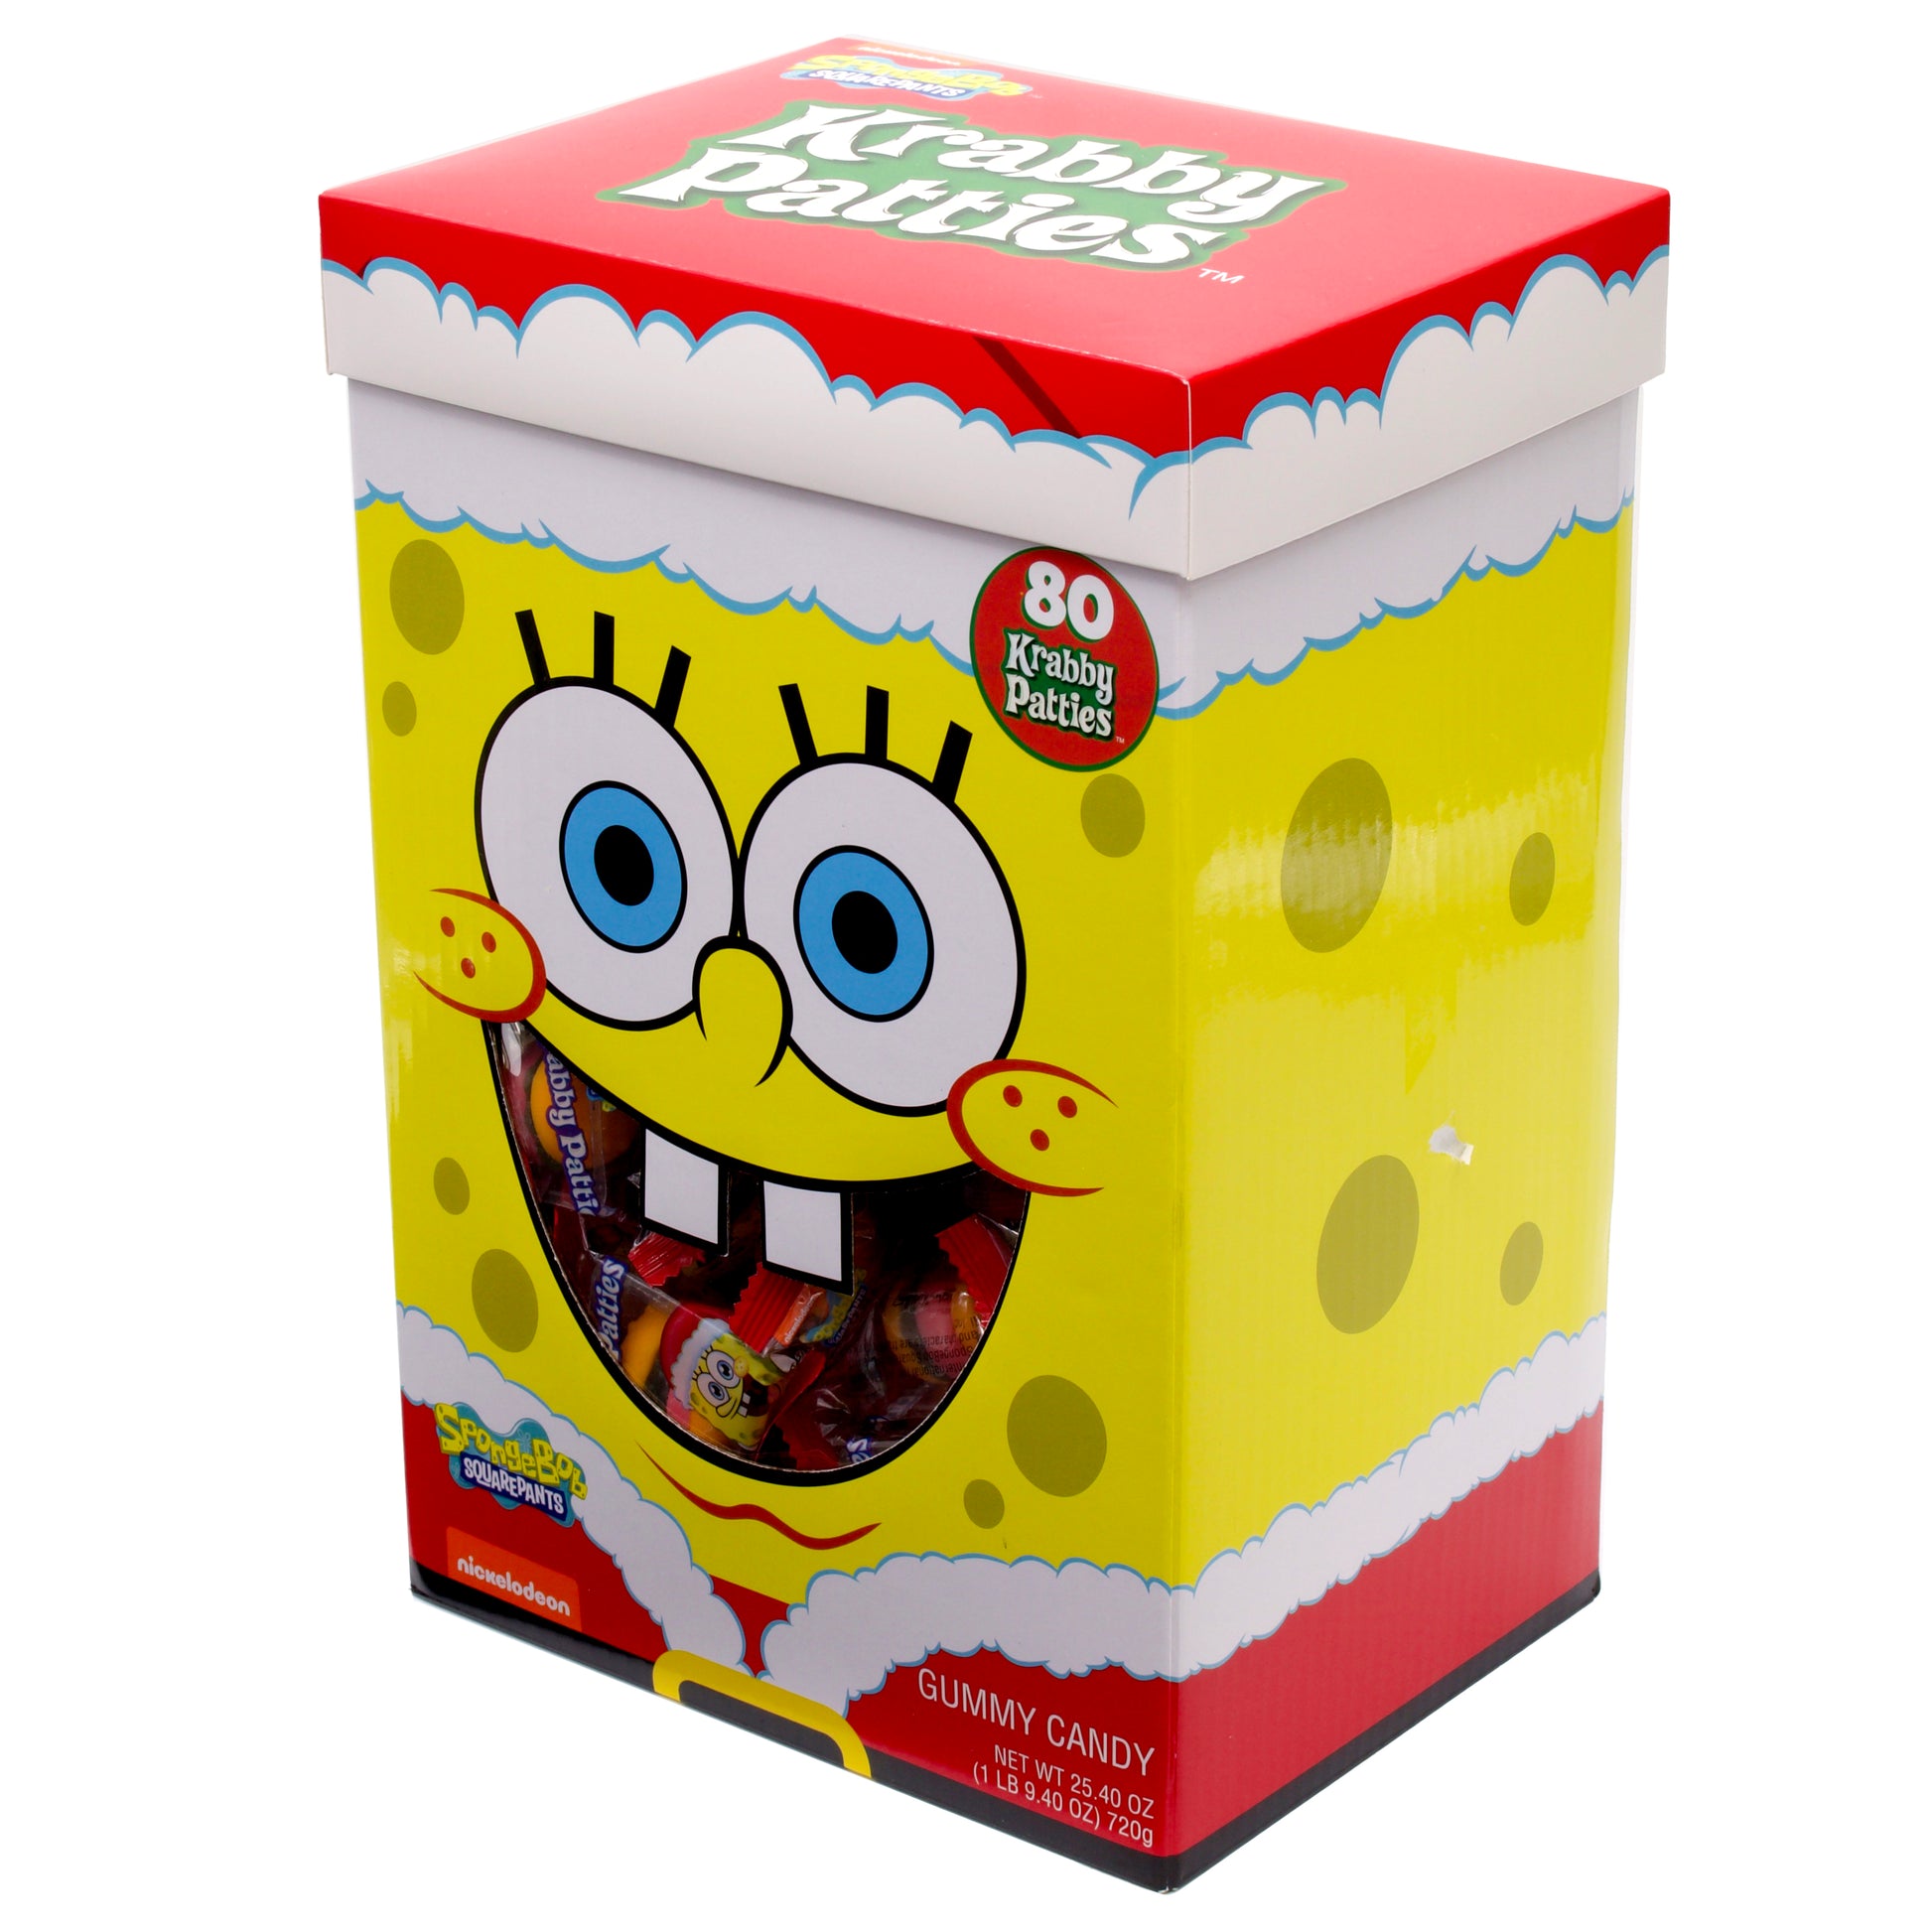 SpongeBob SquarePants Krabby Patties Santa Box, 80 Count – Frankford Candy